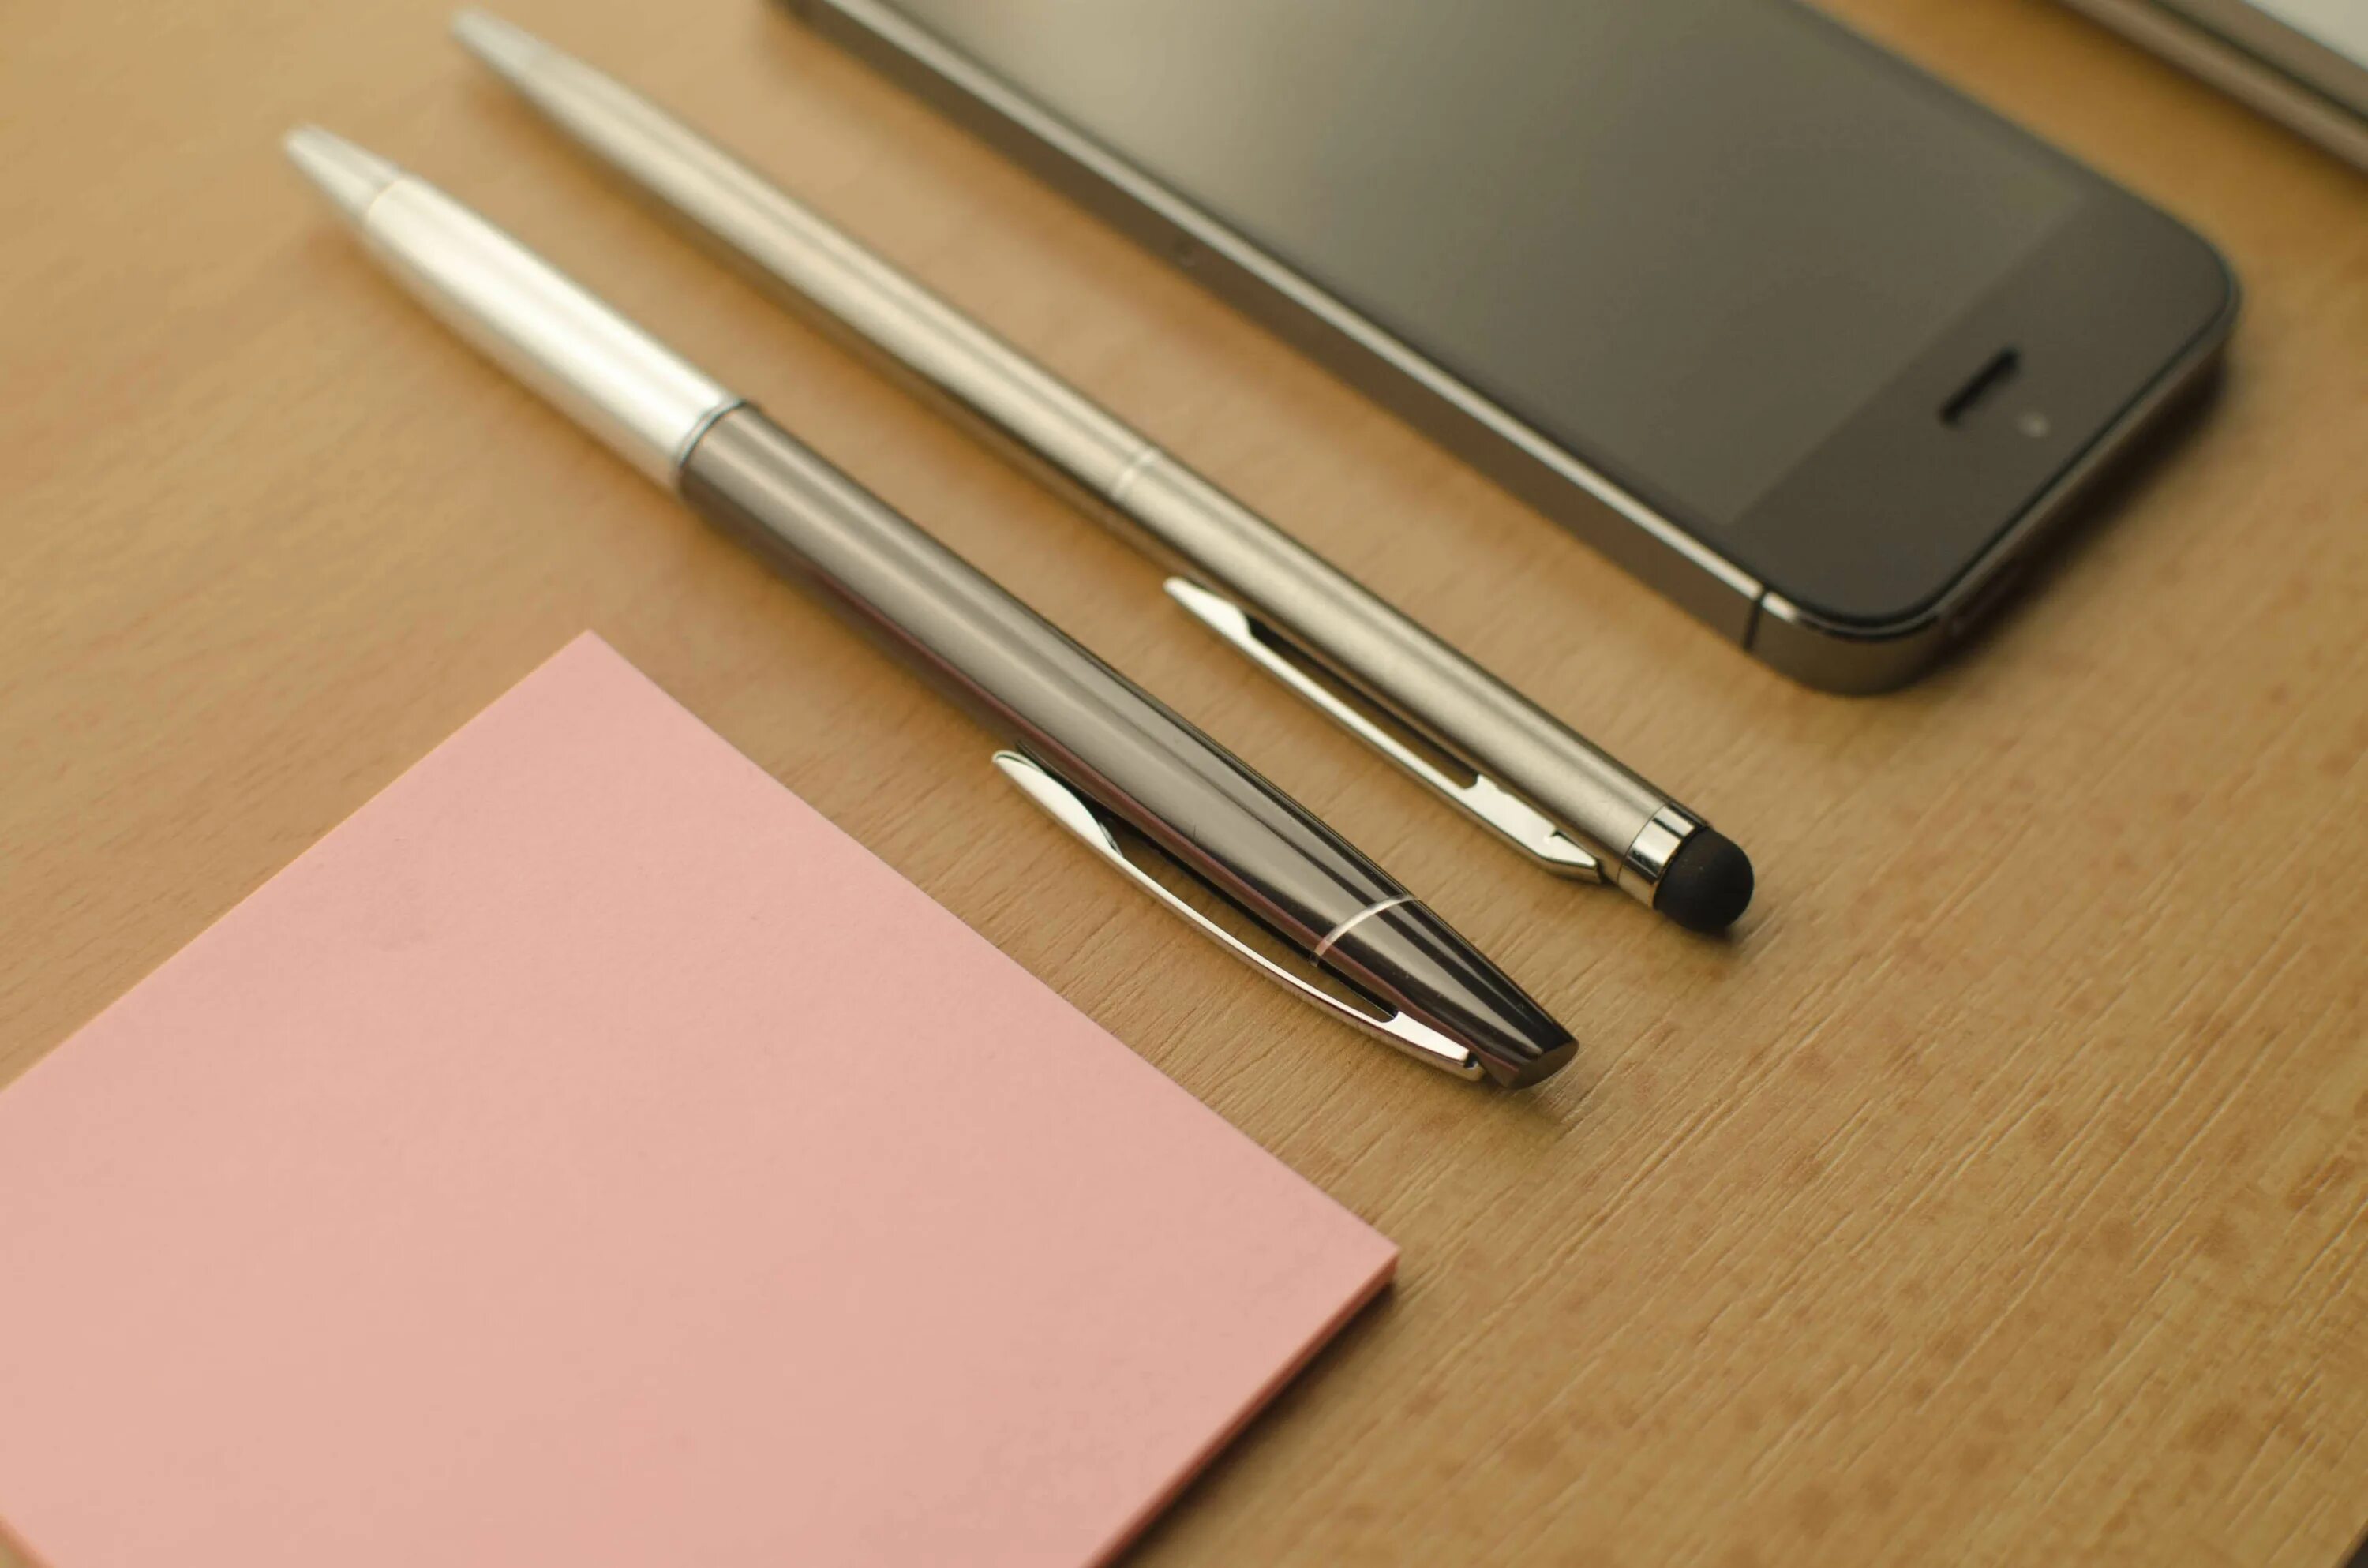 There pens on the table. Ручка на столе. Авторучка. Ручка макбук блокнот айфон. Ручка бумага карандаш в стол много.